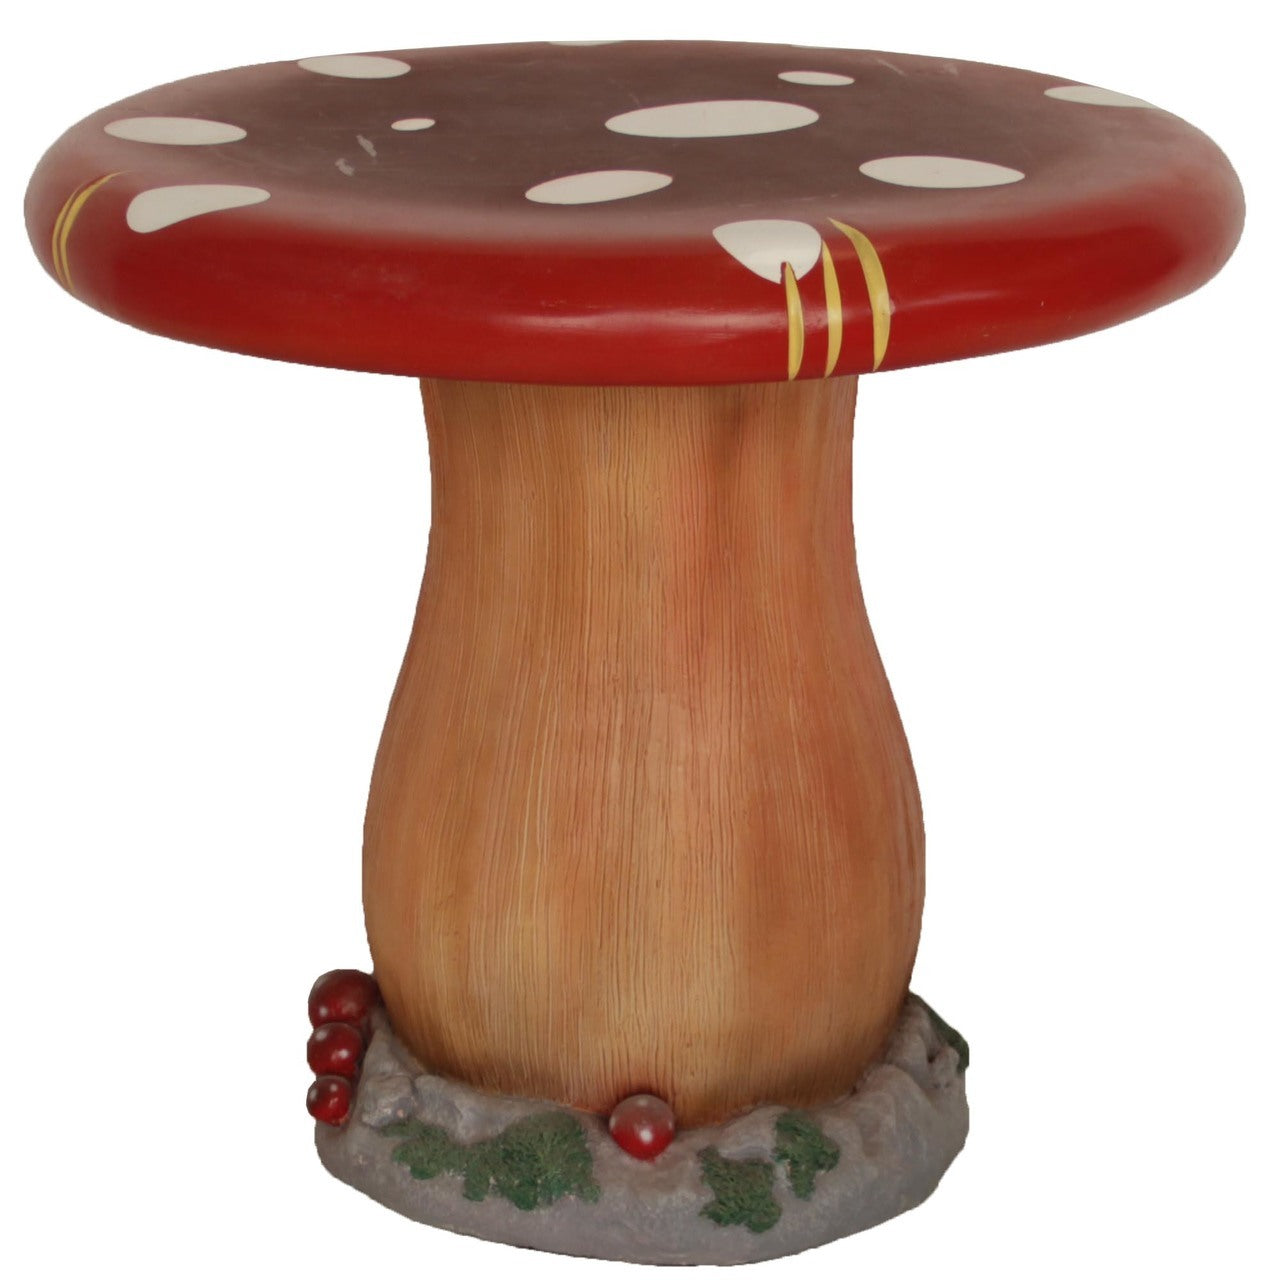 Mushroom Fly Agri Table Prop Decor Statue - LM Treasures Prop Rentals 